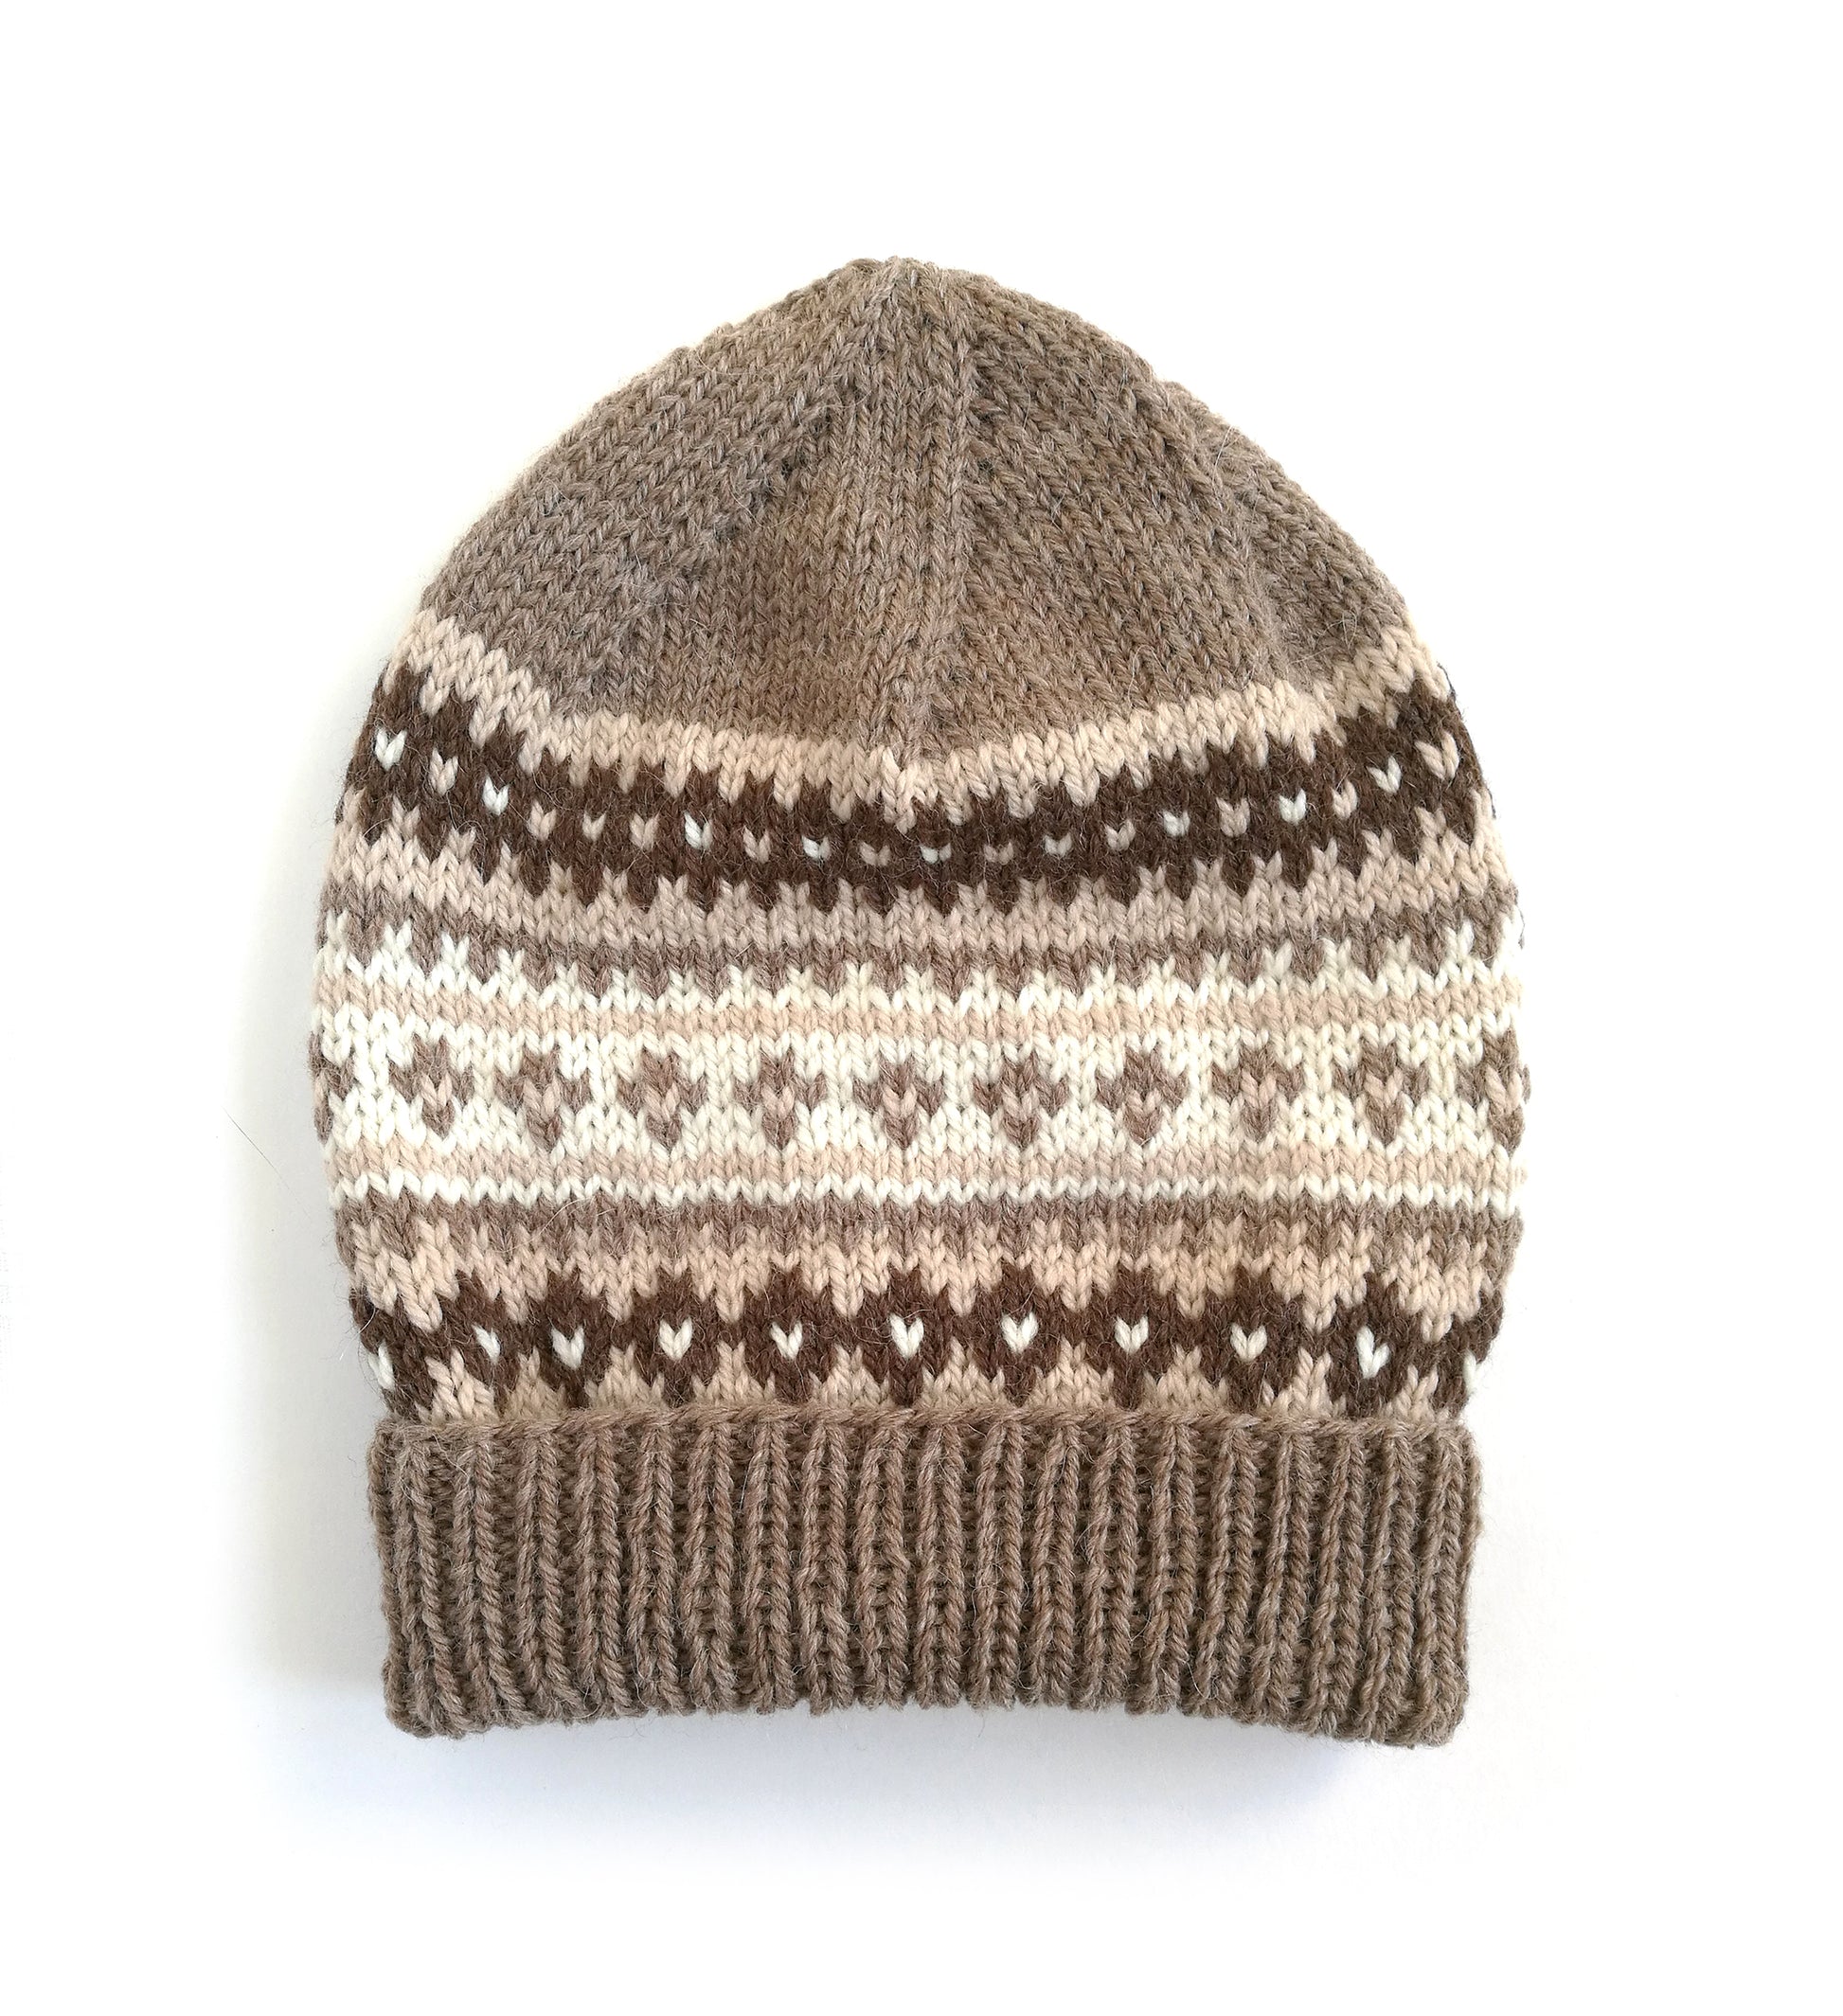 beige, brown and white wool hand-knitted Fair Isle beanie hat